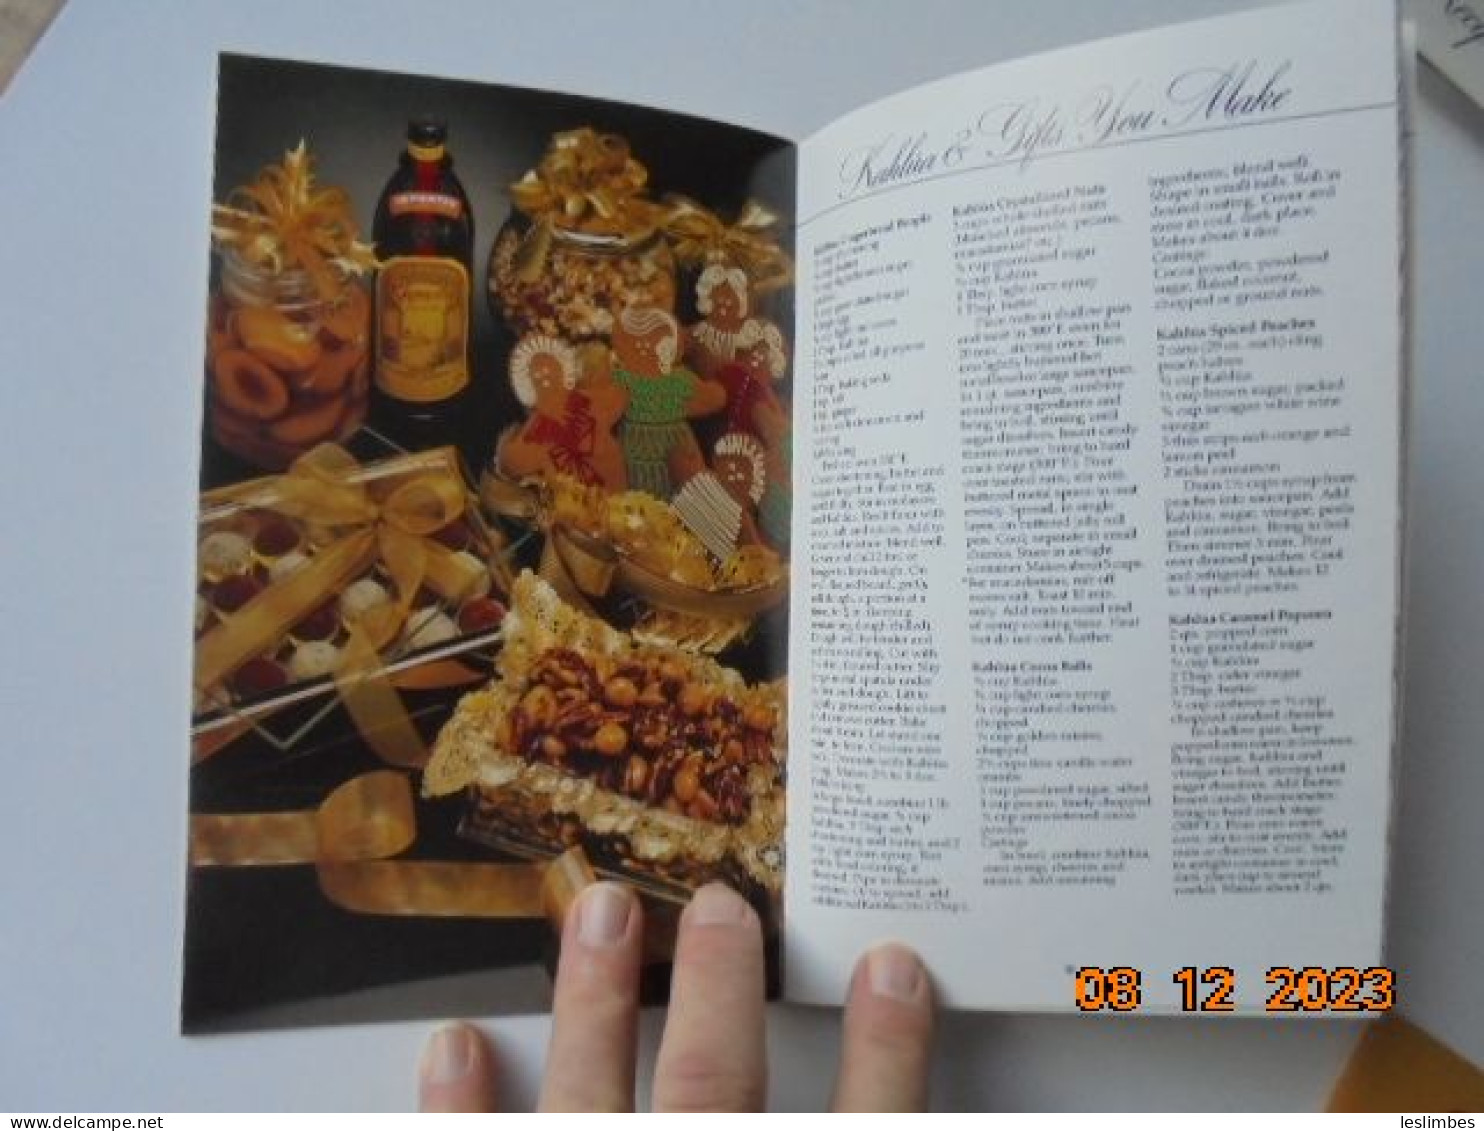 Kahlua Recipe Book - Maidstone Wine & Spirits Inc. 1986 - American (US)